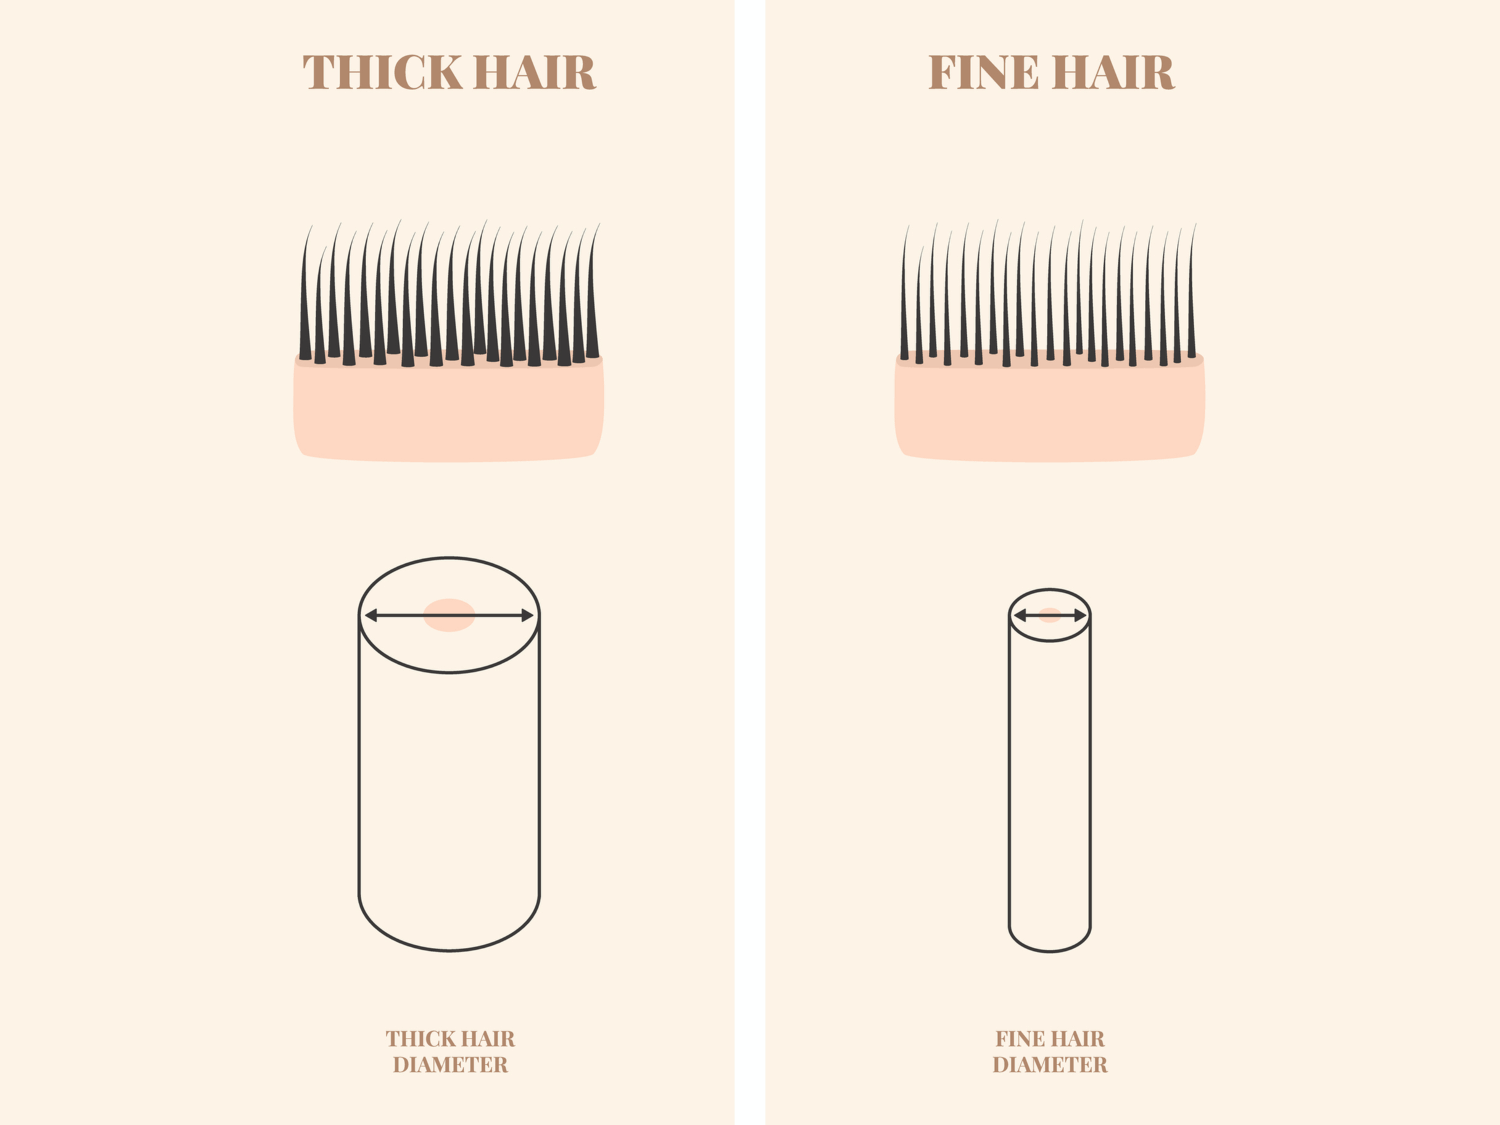 Can You Perm Fine Hair?